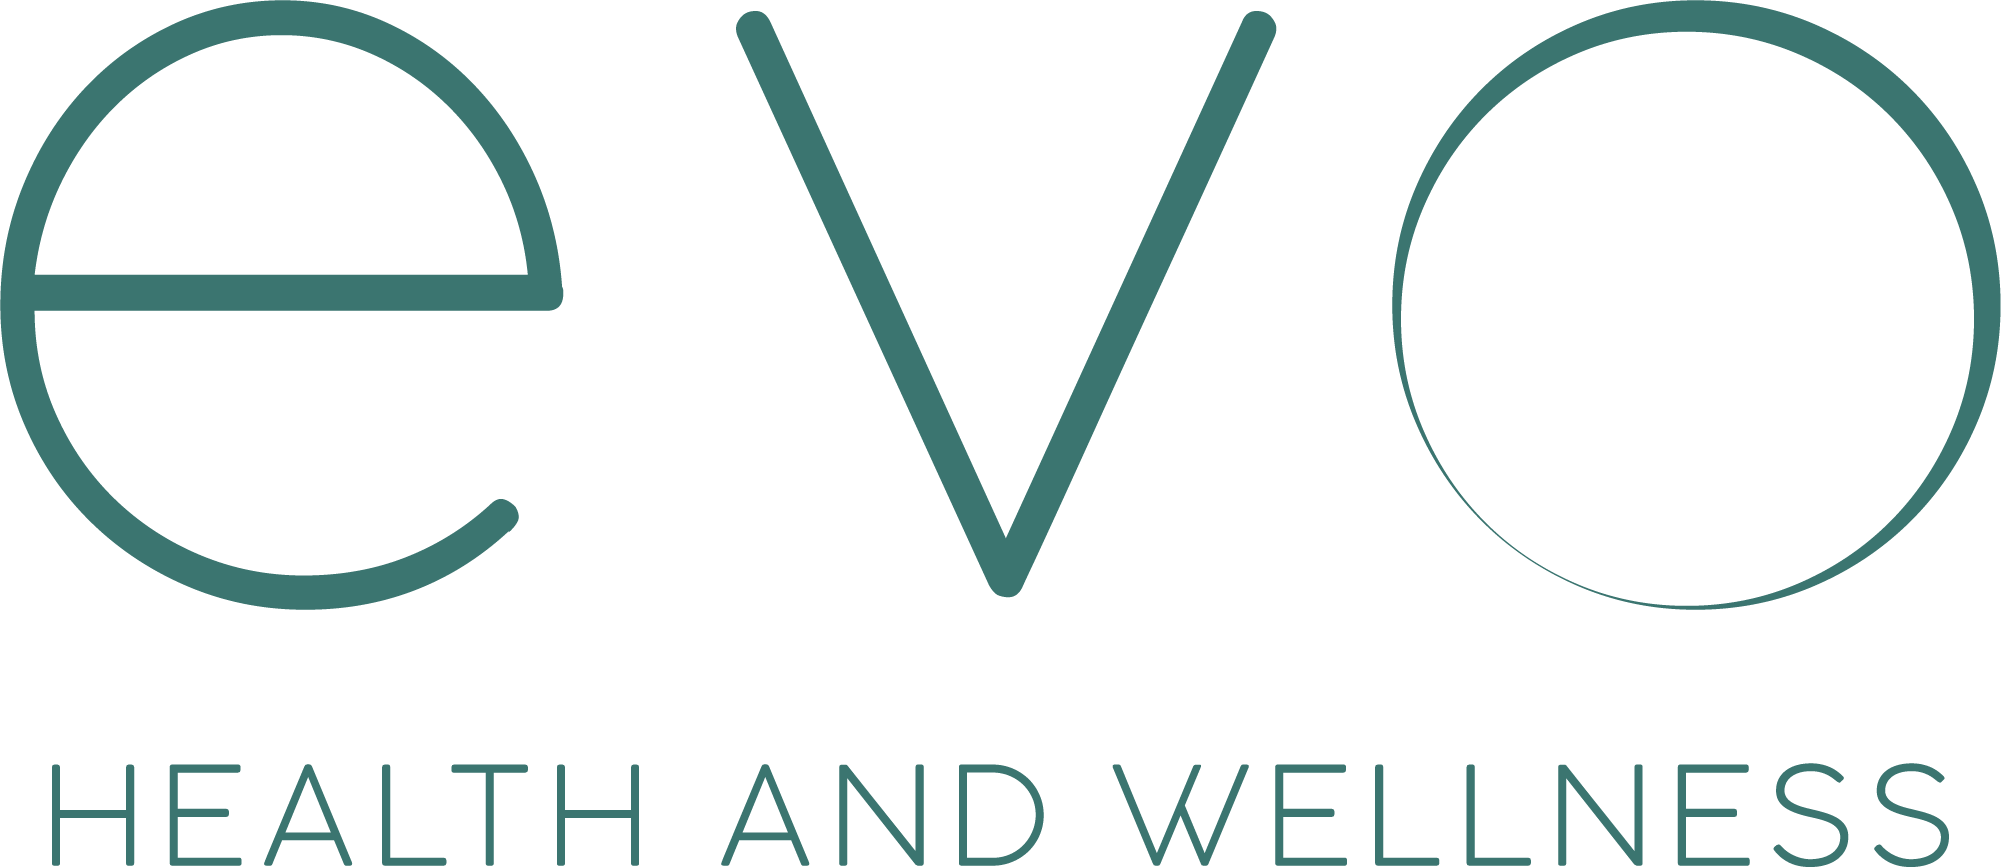 Evo Health and Wellness logo